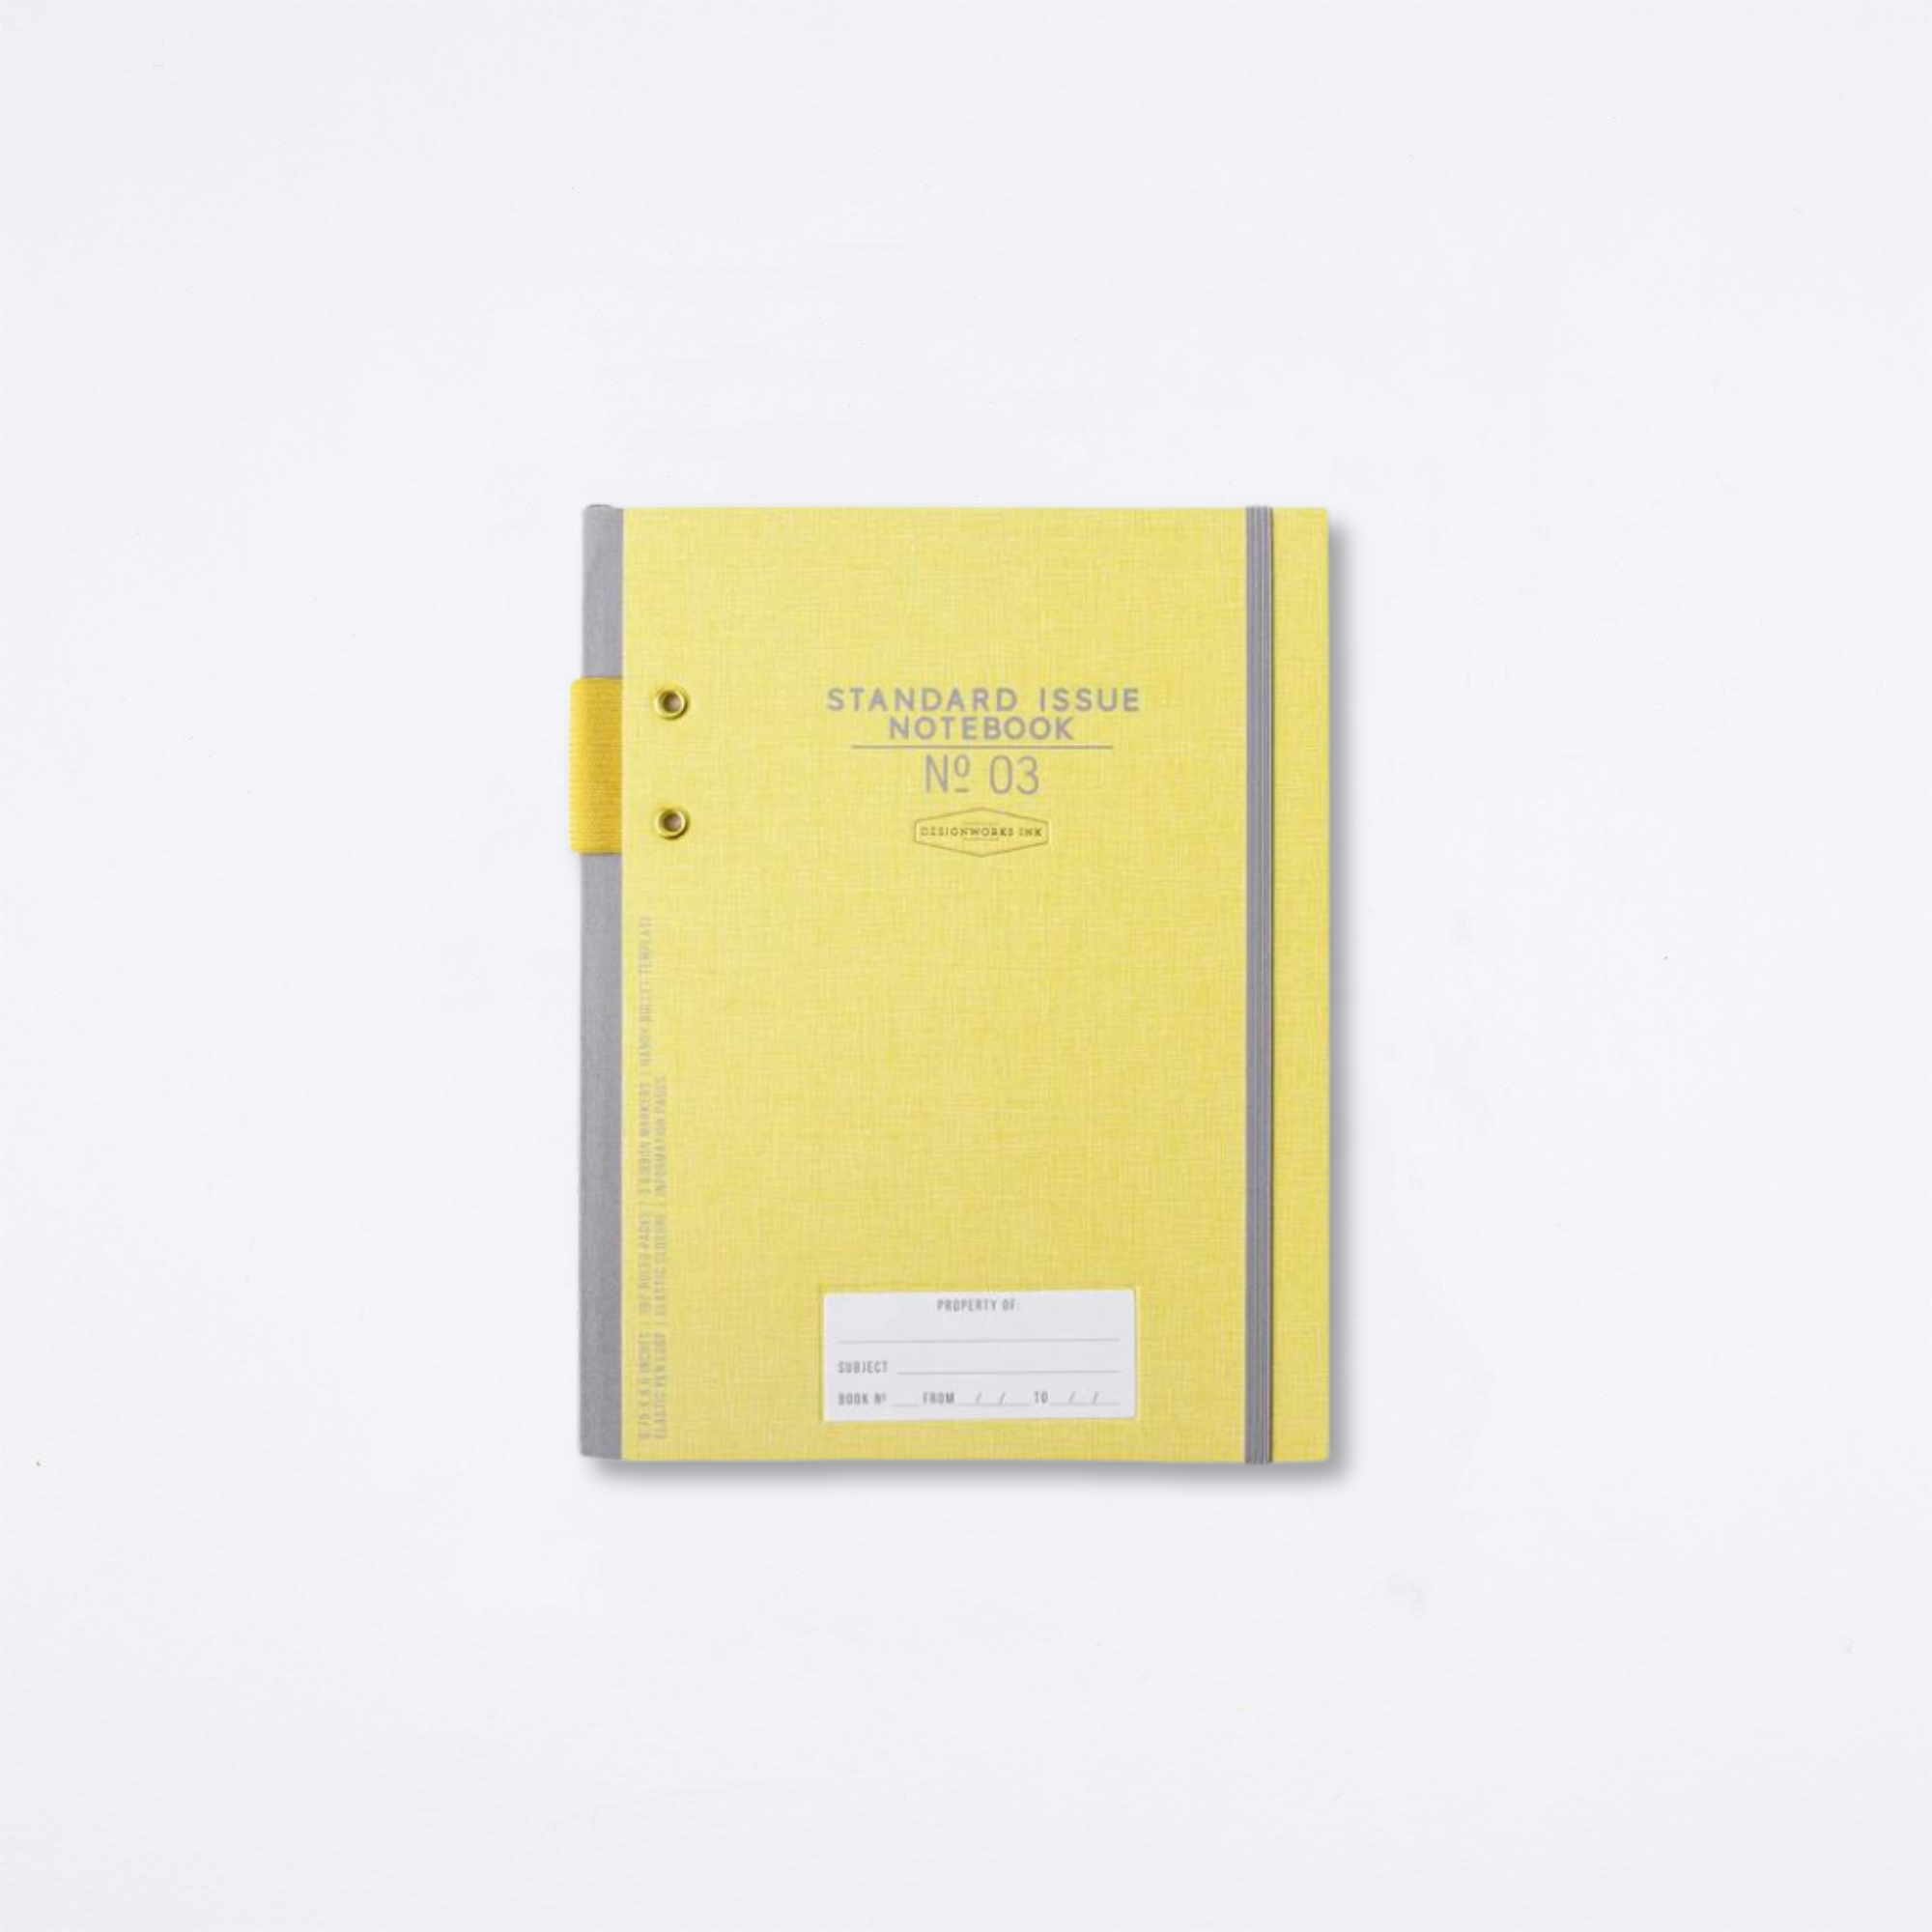 Standard Issue Notebook No. 3